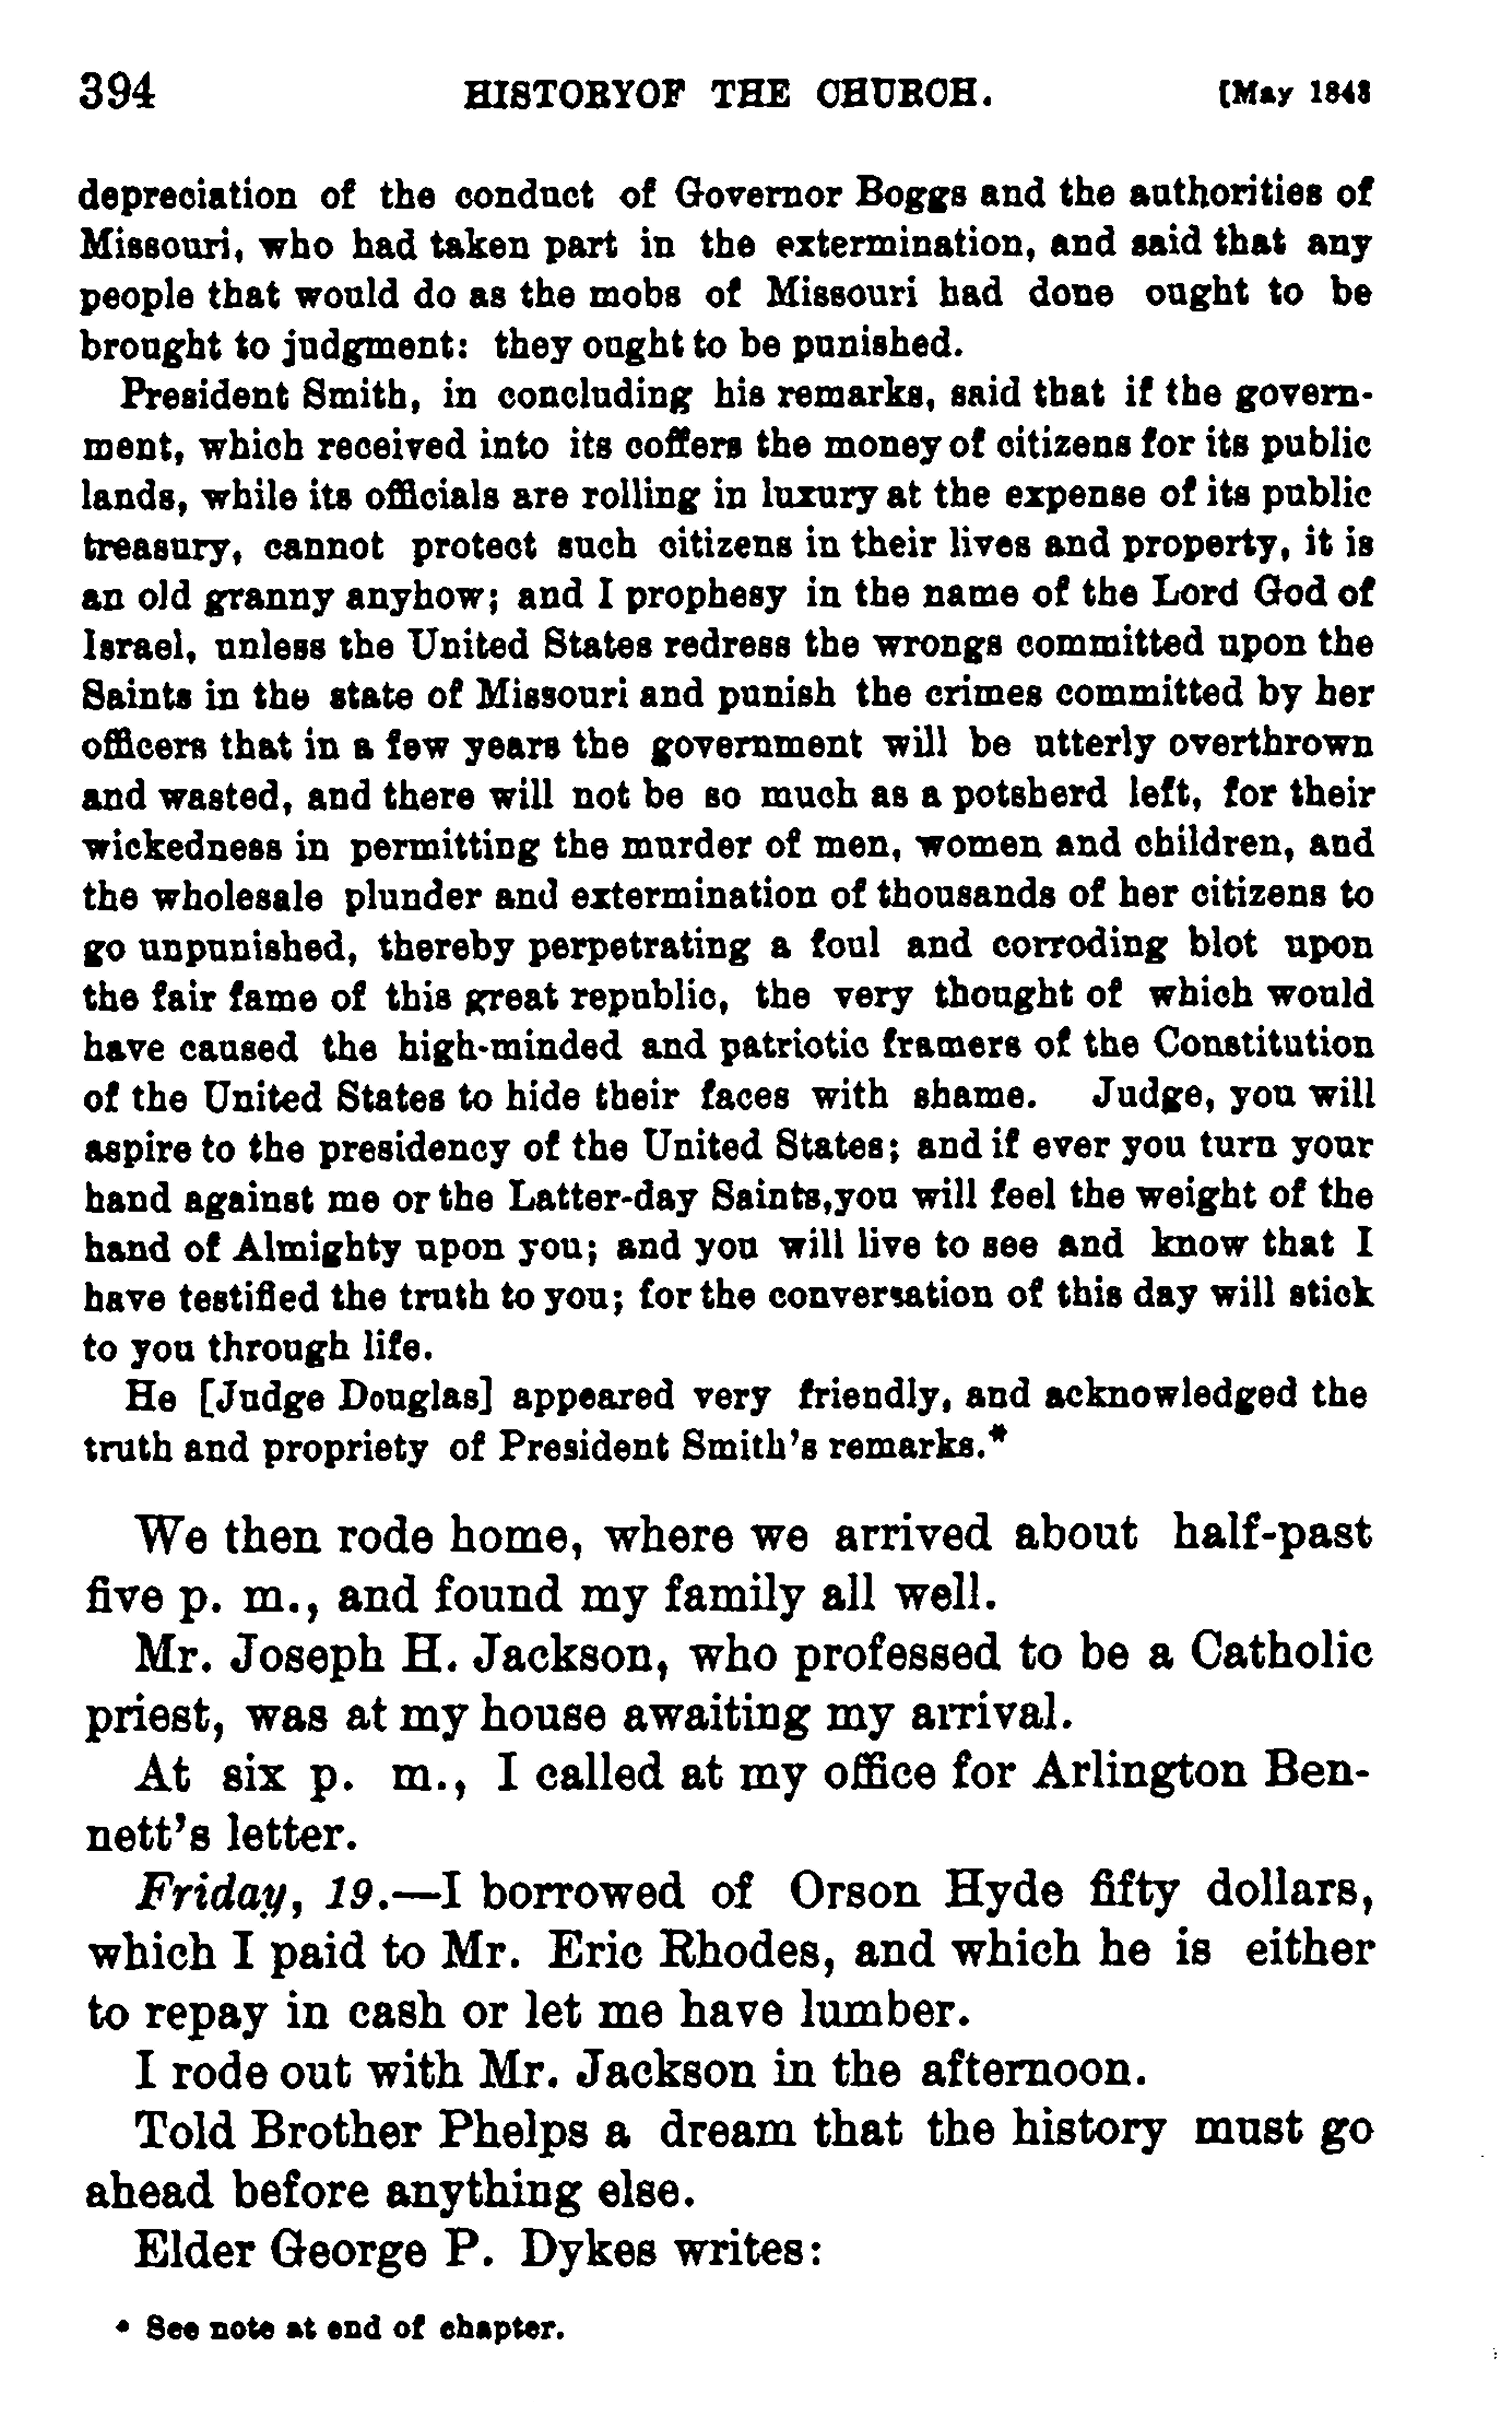 History of the Church, vol. 5, p. 394